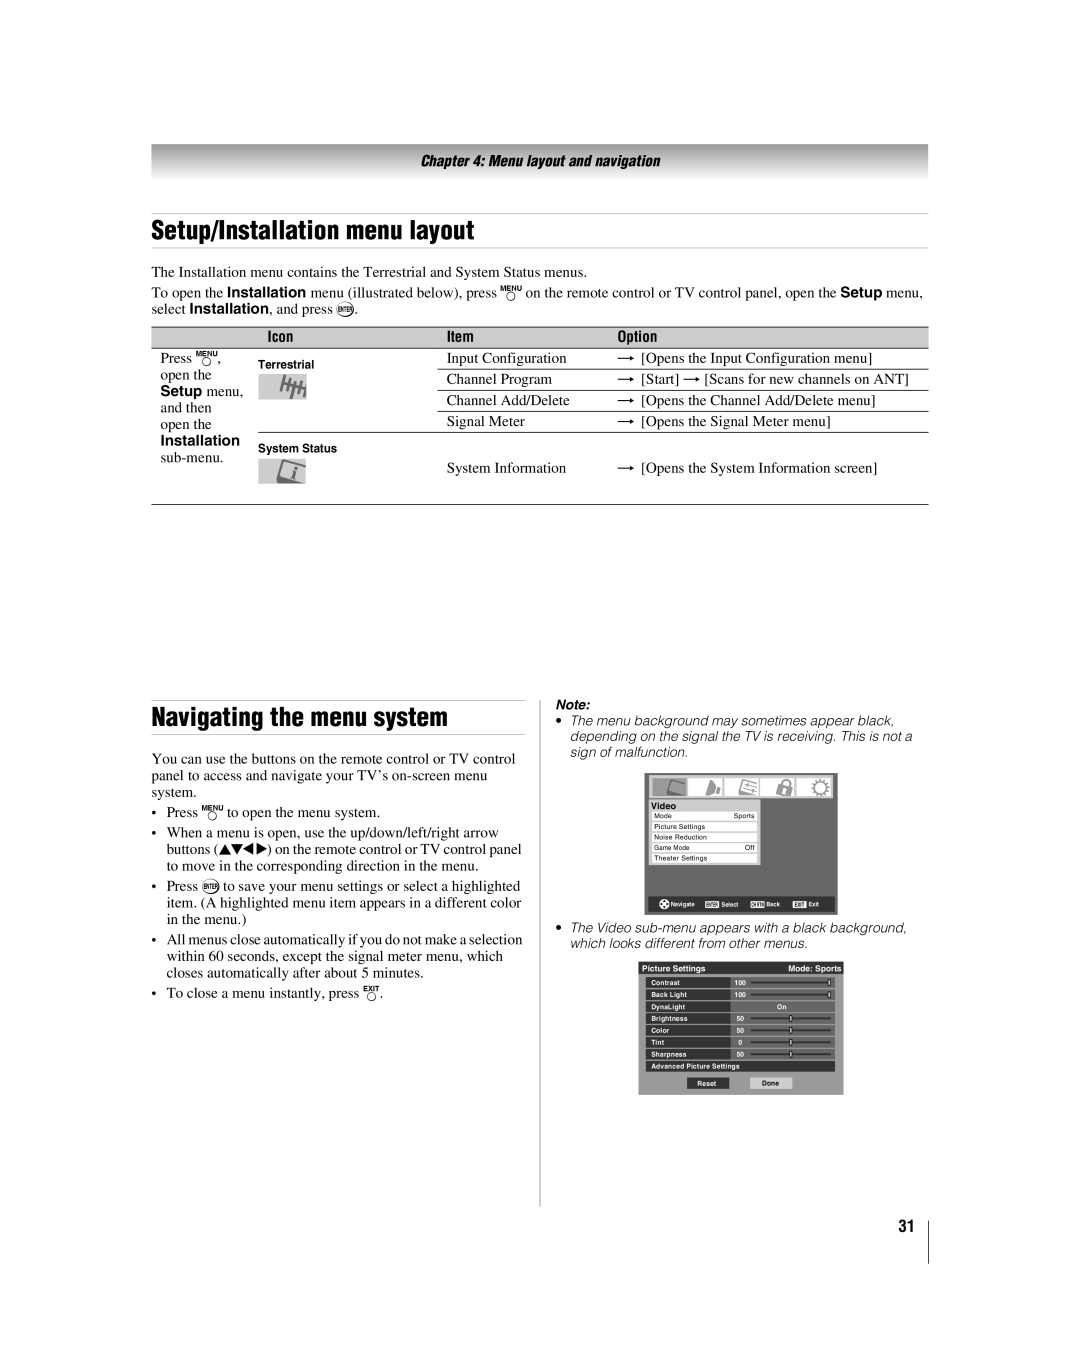 Toshiba 32LV37U Setup/Installation menu layout, Navigating the menu system, Menu layout and navigation, Setup menu, Icon 